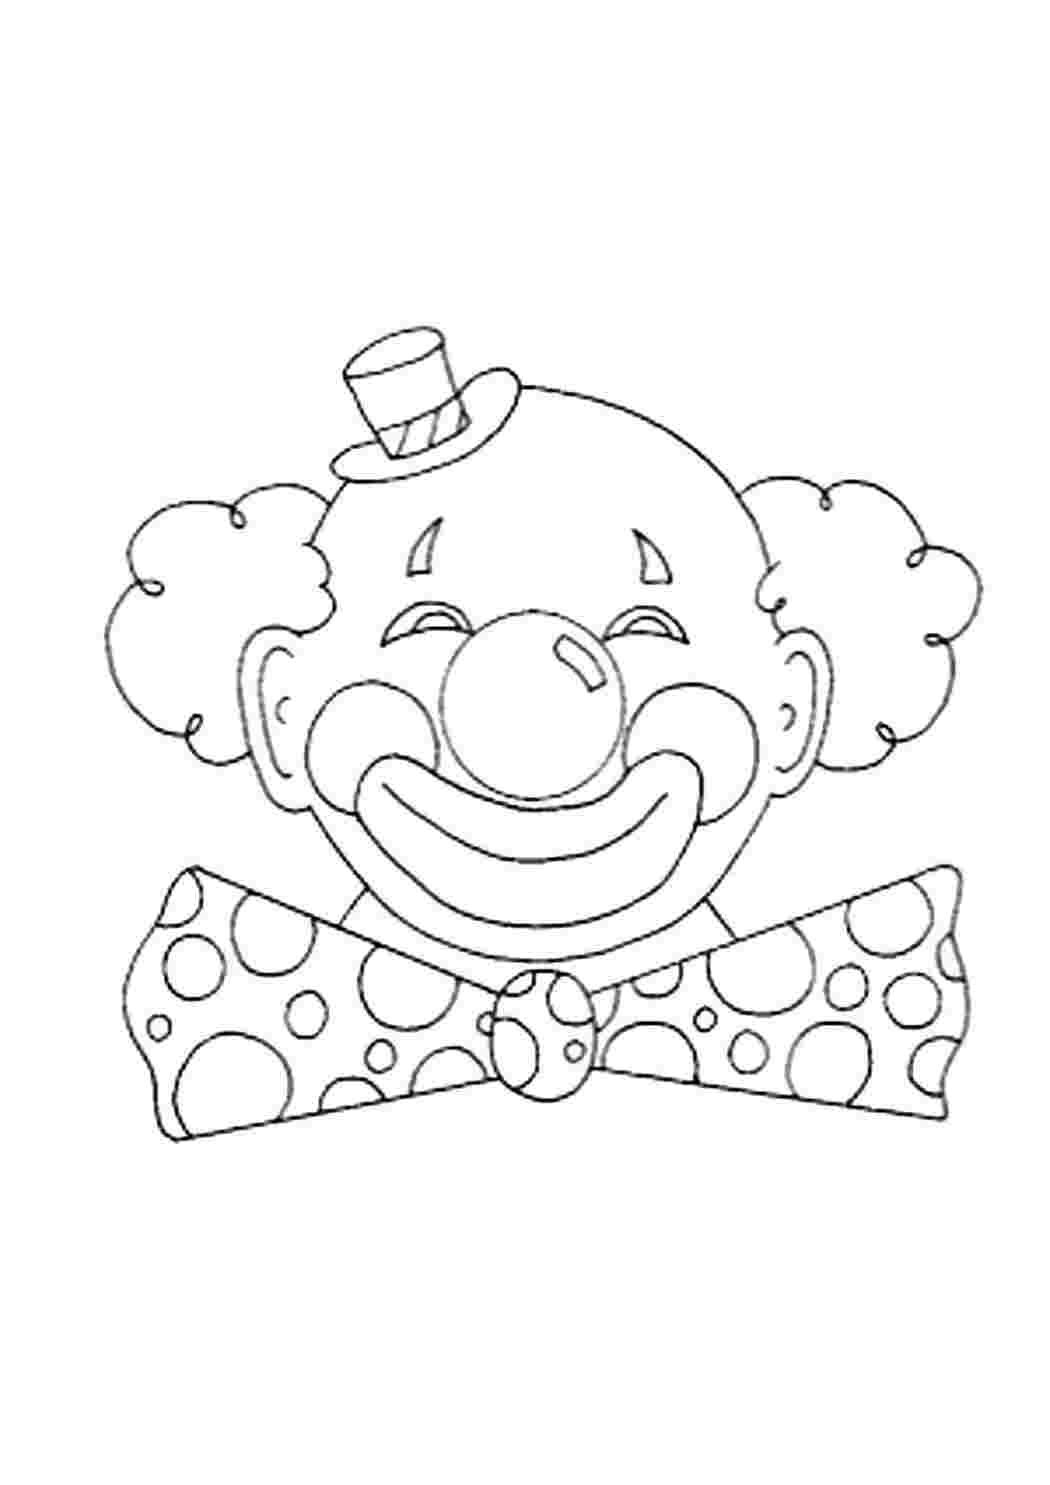 Шаблон клоуна для аппликации для детей. Клоун аппликация для детей шаблоны. Лицо клоуна раскраска. Шаблон лица клоуна для аппликации из бумаги. Лицо клоуна раскраски для детей.